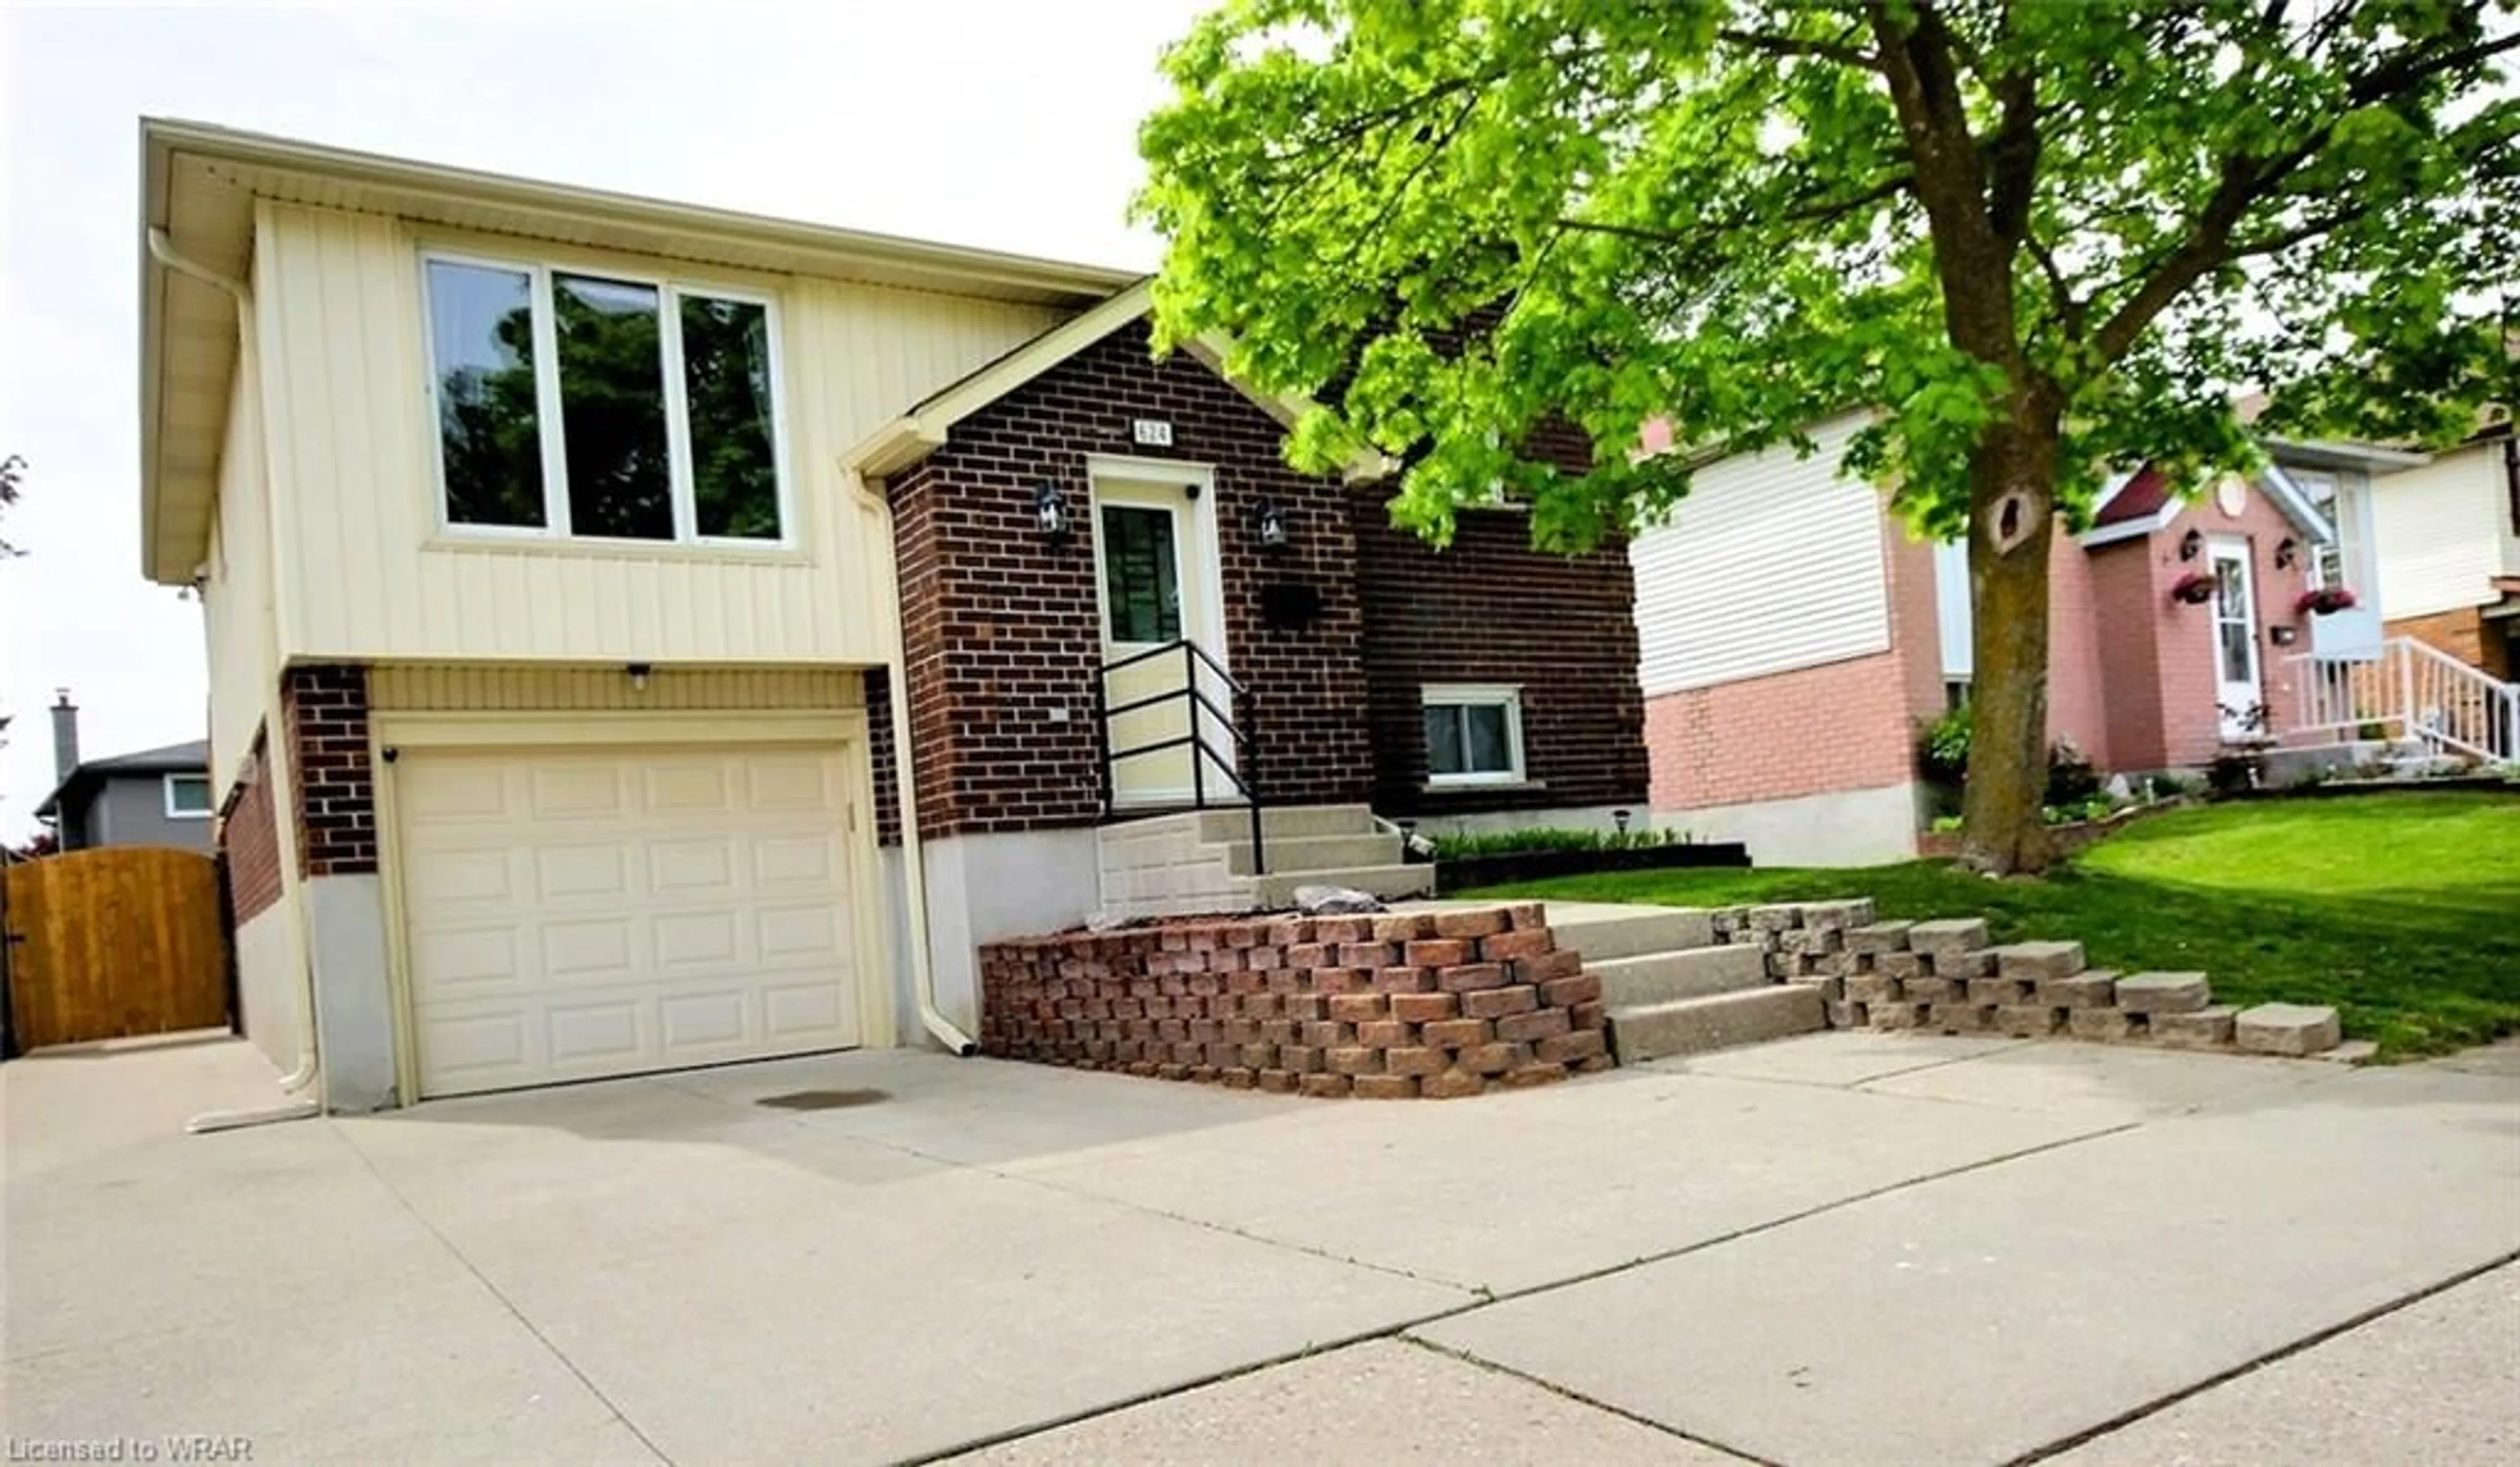 Home with brick exterior material for 624 Preston Pky, Cambridge Ontario N3H 5S9